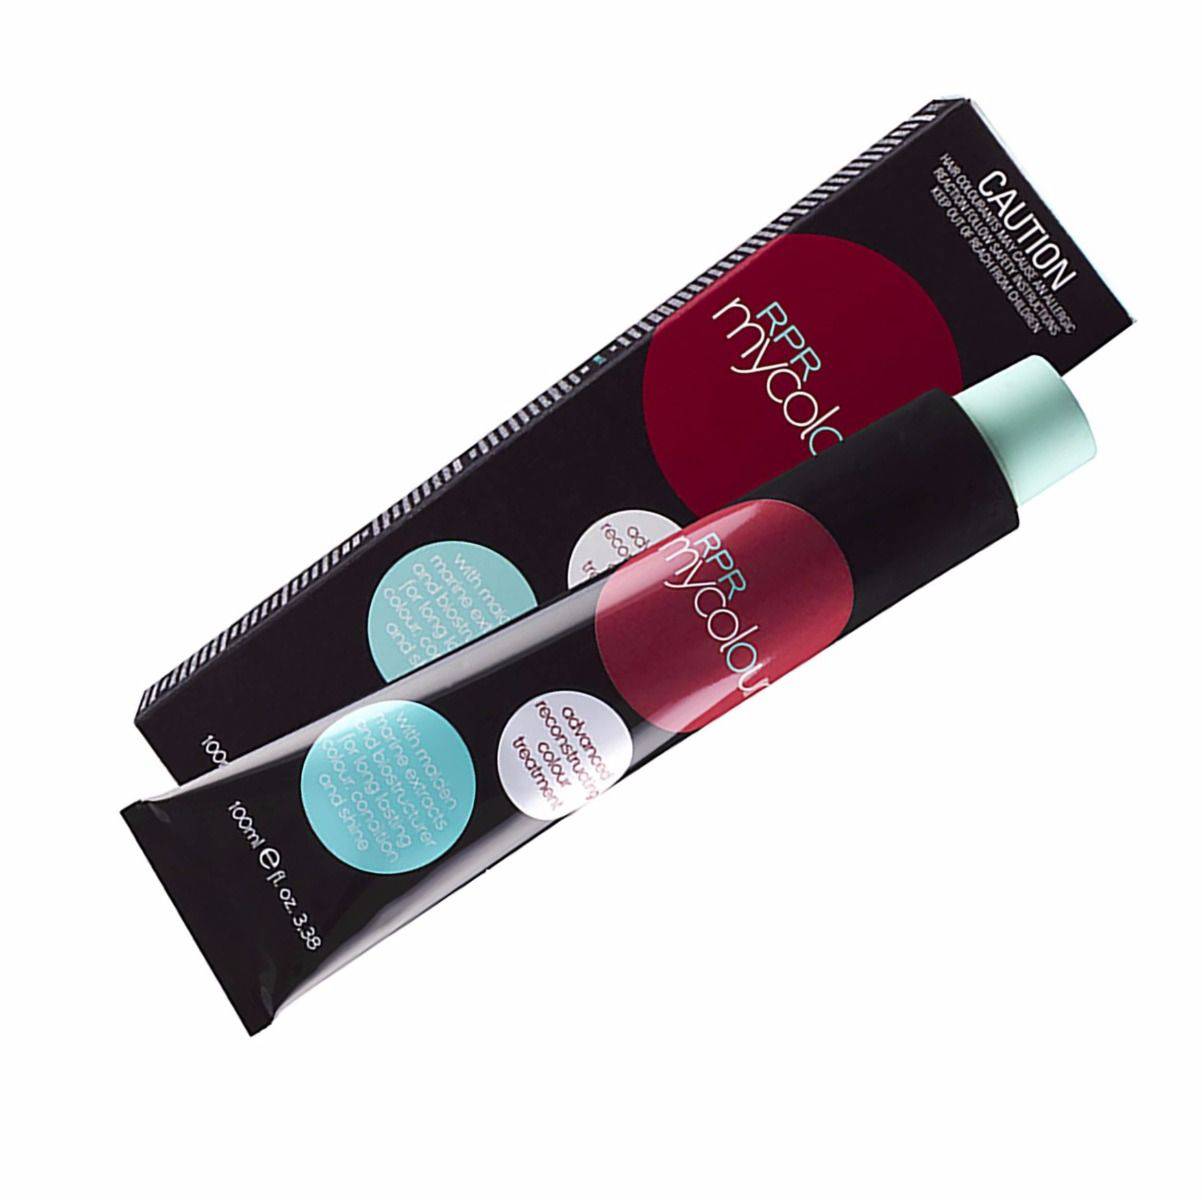 RPR My Colour 7.22 Level 7 Intense Violet 100g tube Mix 1:1.5 - On Line Hair Depot